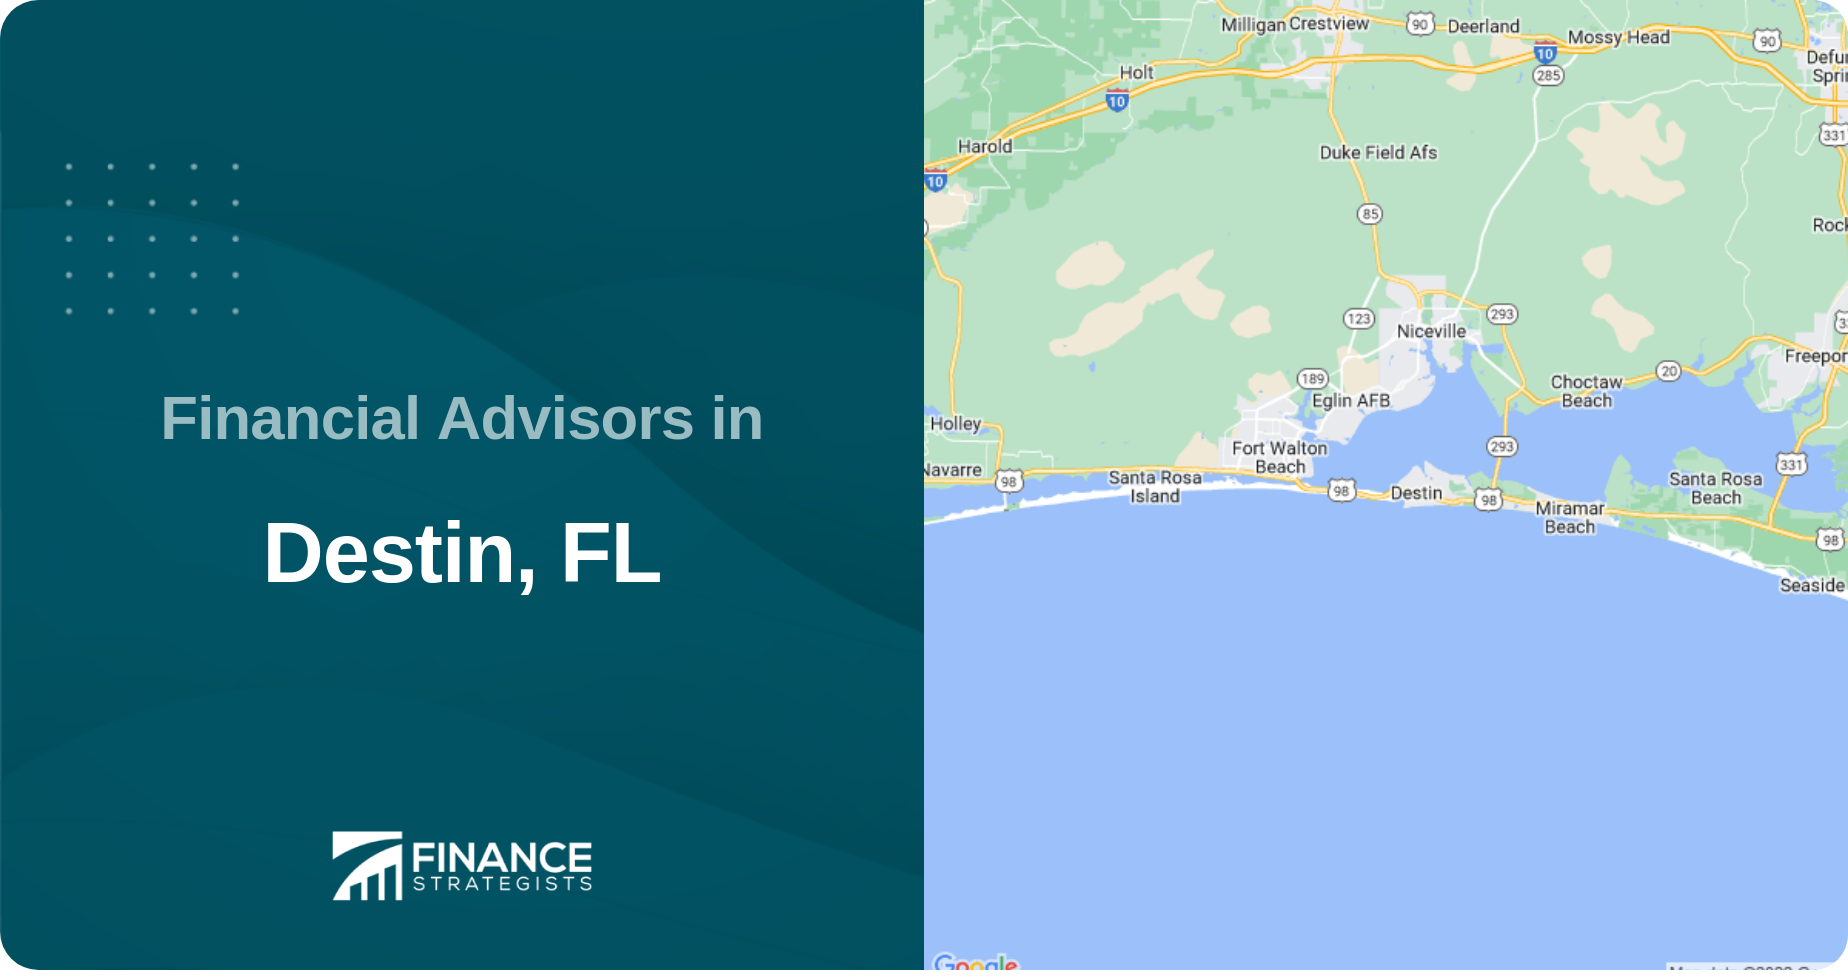 Financial Advisors in Destin, FL